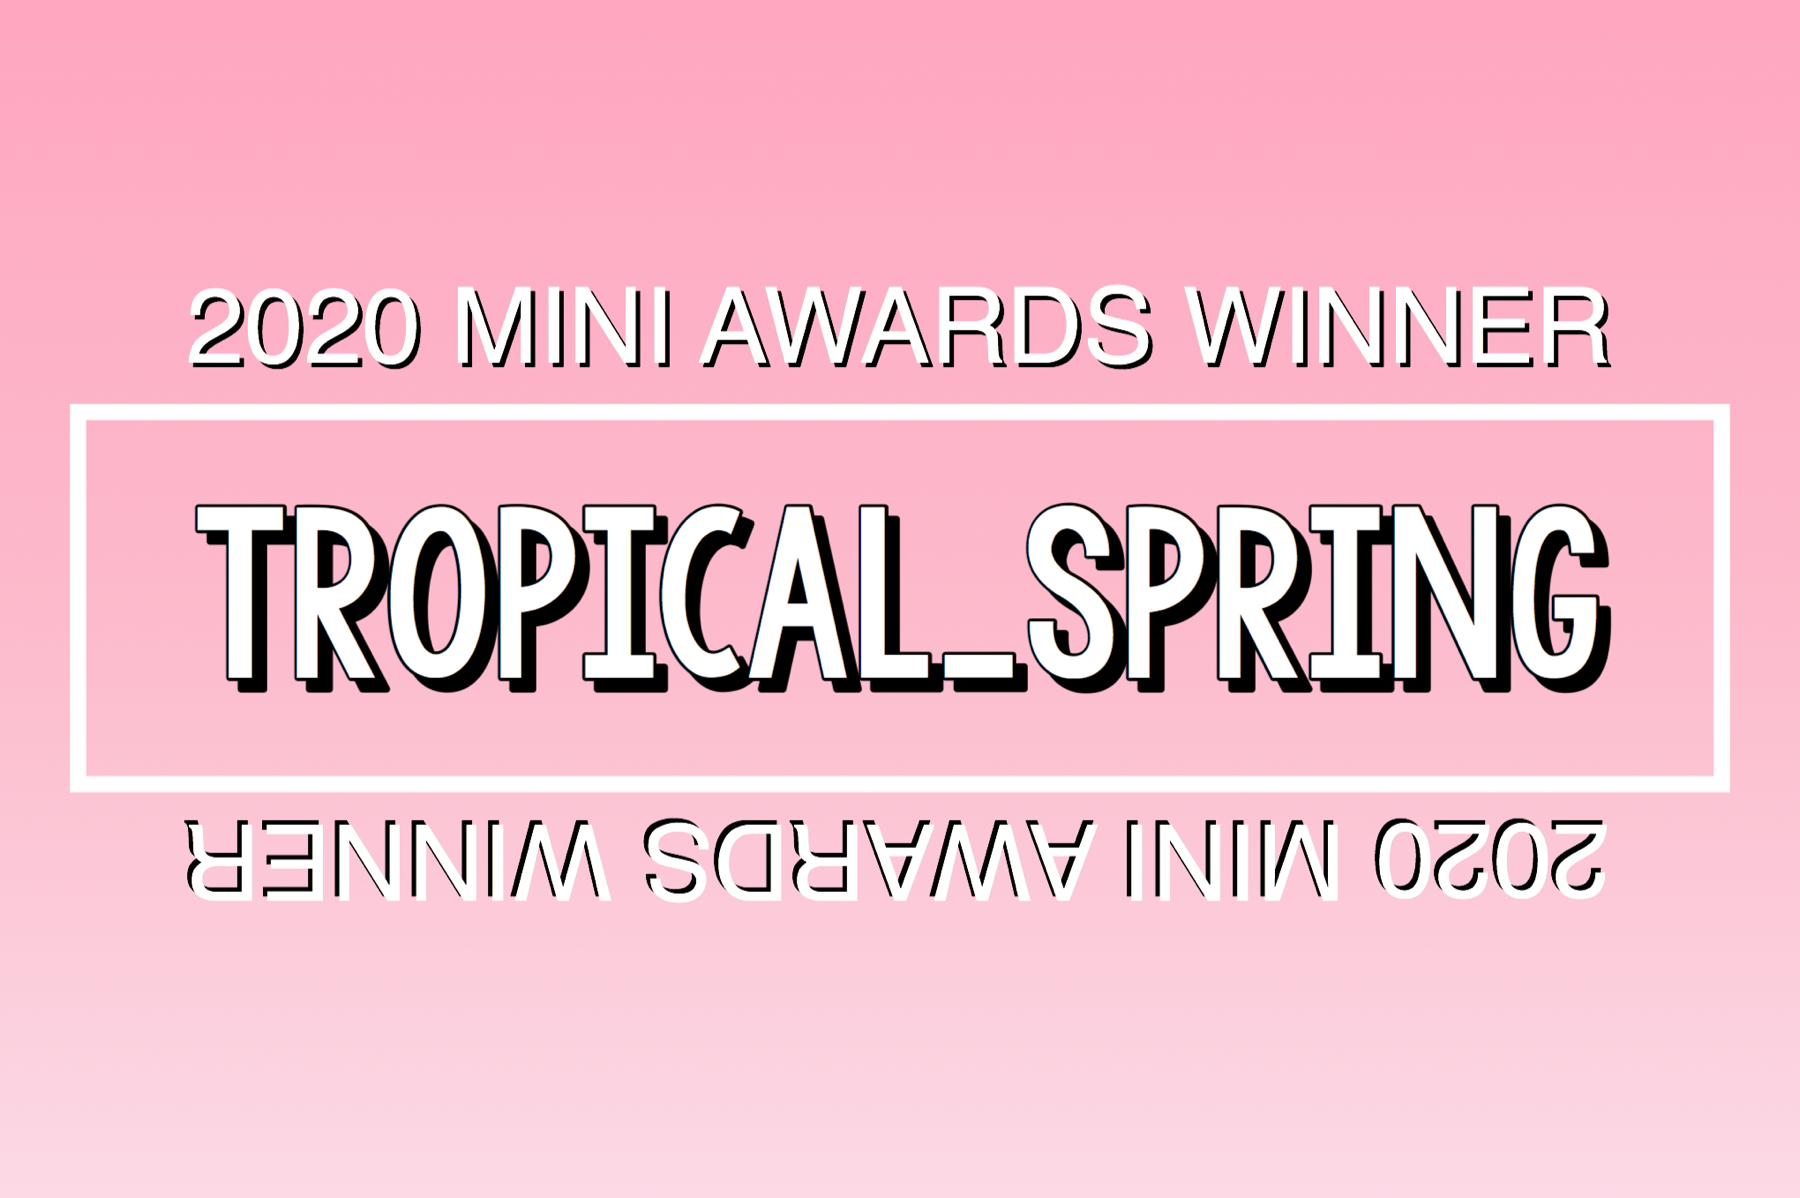 2020 Mini Awards Winner @Tropical_Spring!